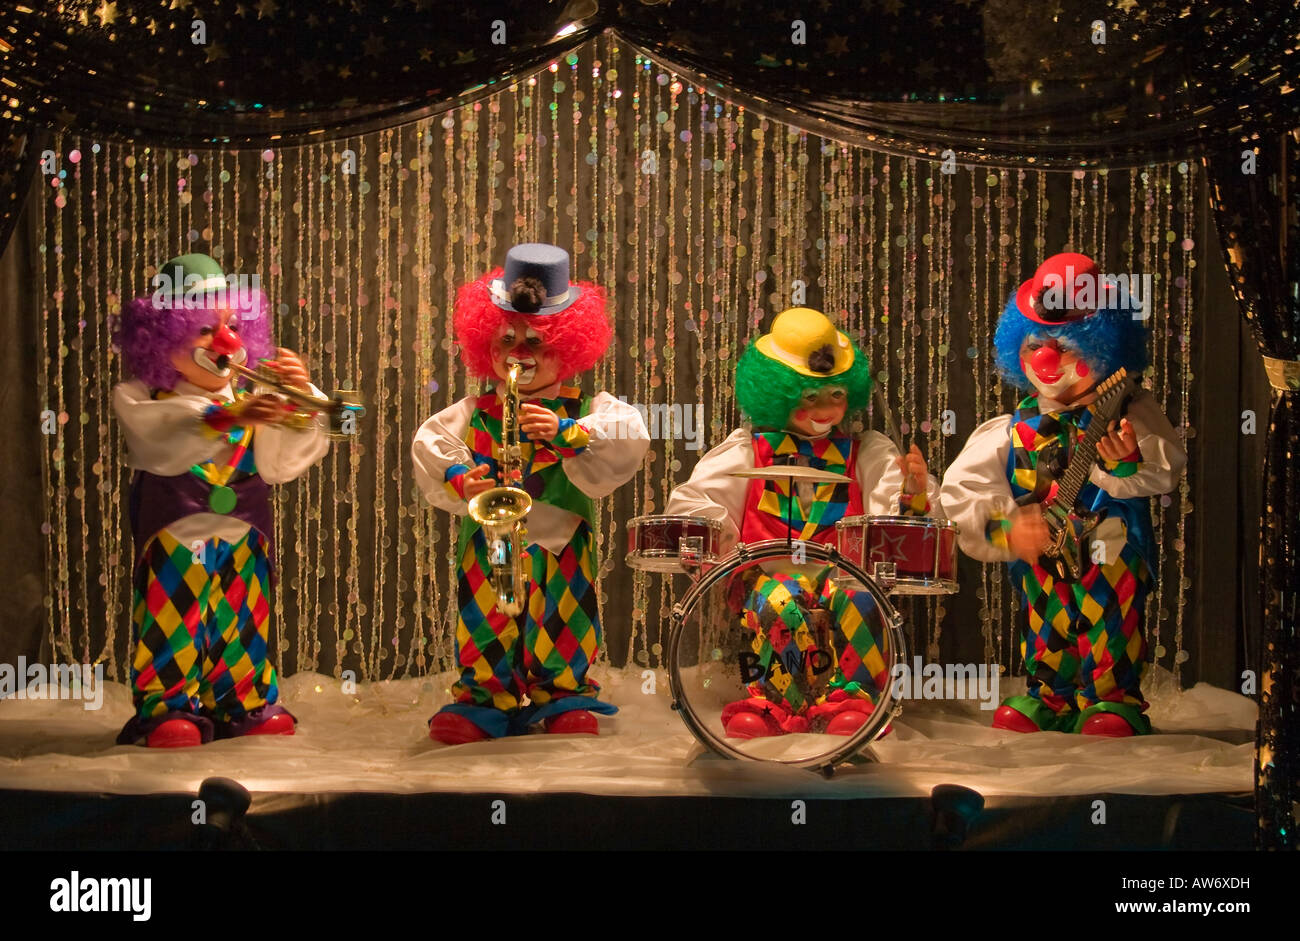 puppet-clown-band-playing-music-AW6XDH.jpg